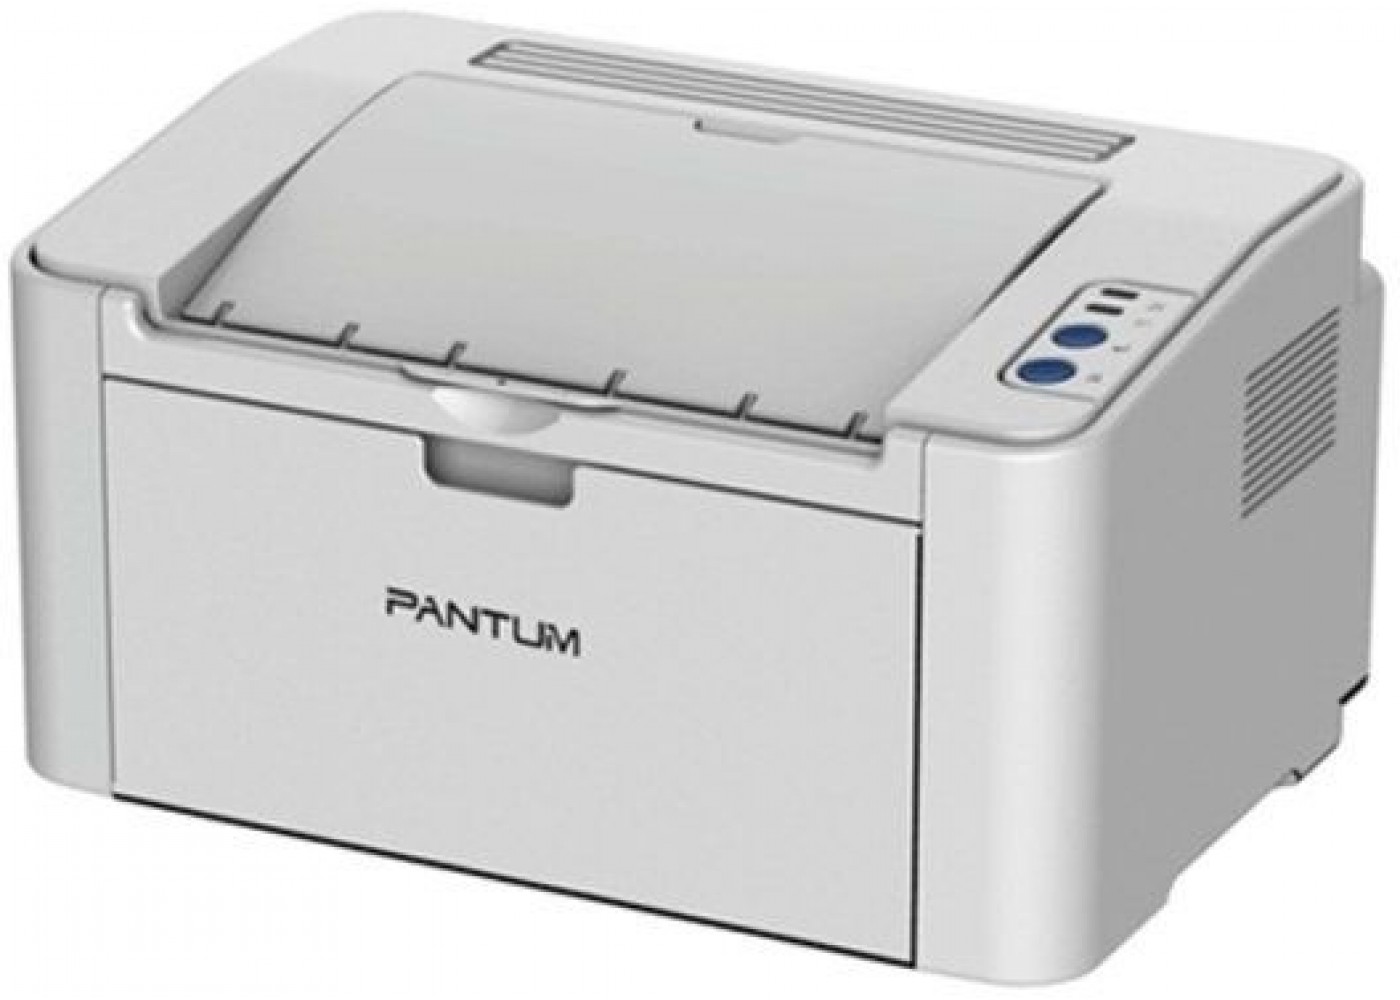 P2200 series драйвер. Принтер лазерный Pantum p2200. Принтер лазерный Pantum p2200 a4. Принтер лазерный Pantum p2200 серый. Pantum принтер p2200 принтер.